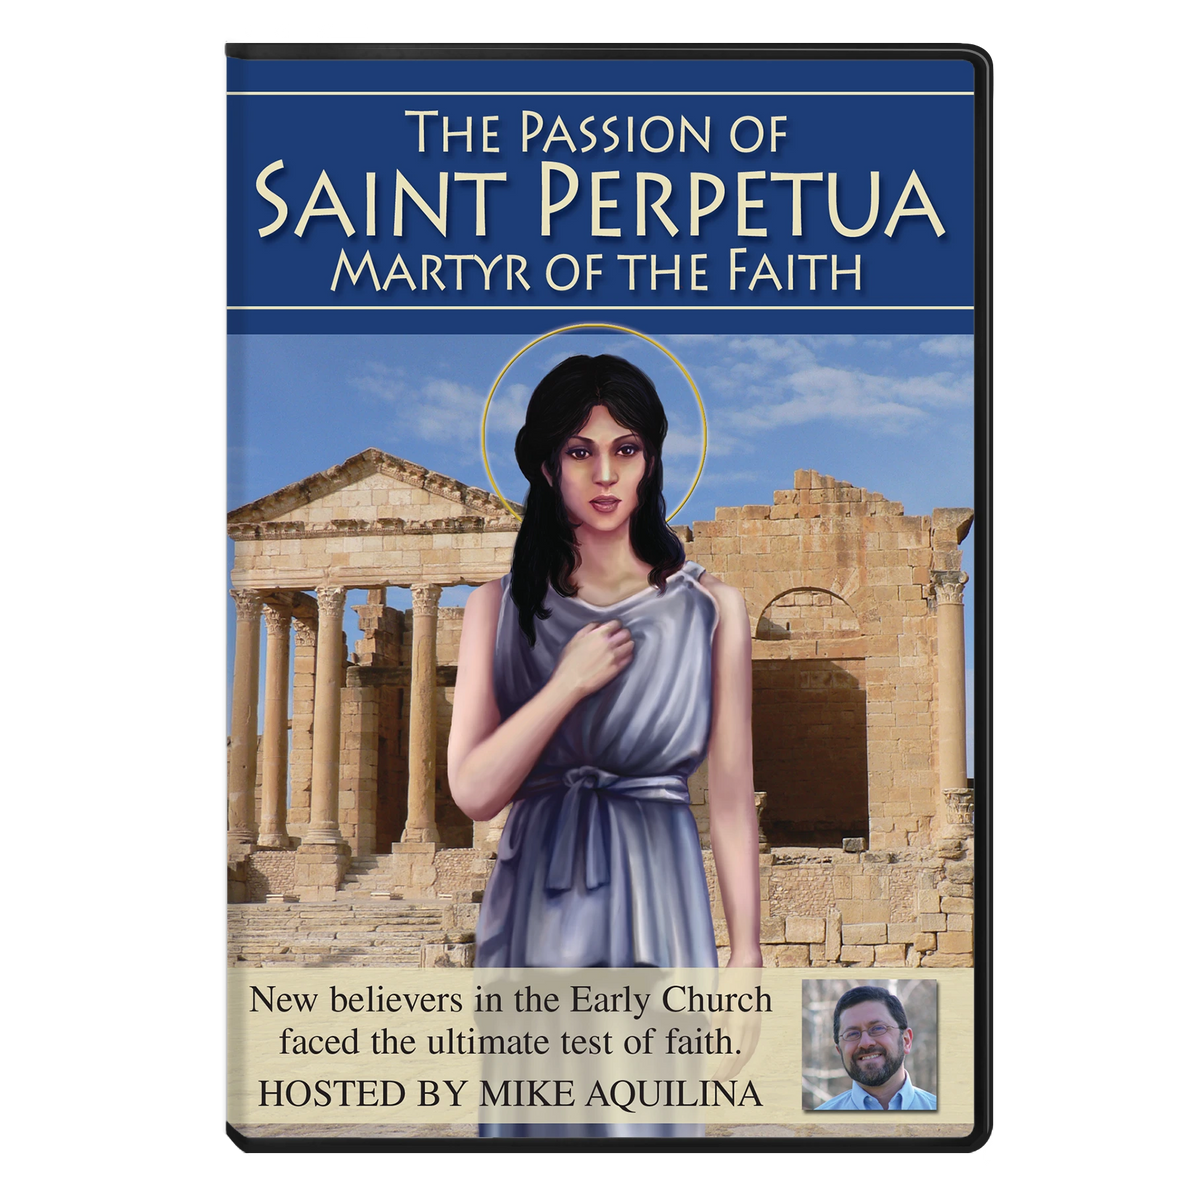 Catholic Heroes of the Faith - The Passion of Saint Perpetua (Documentary)